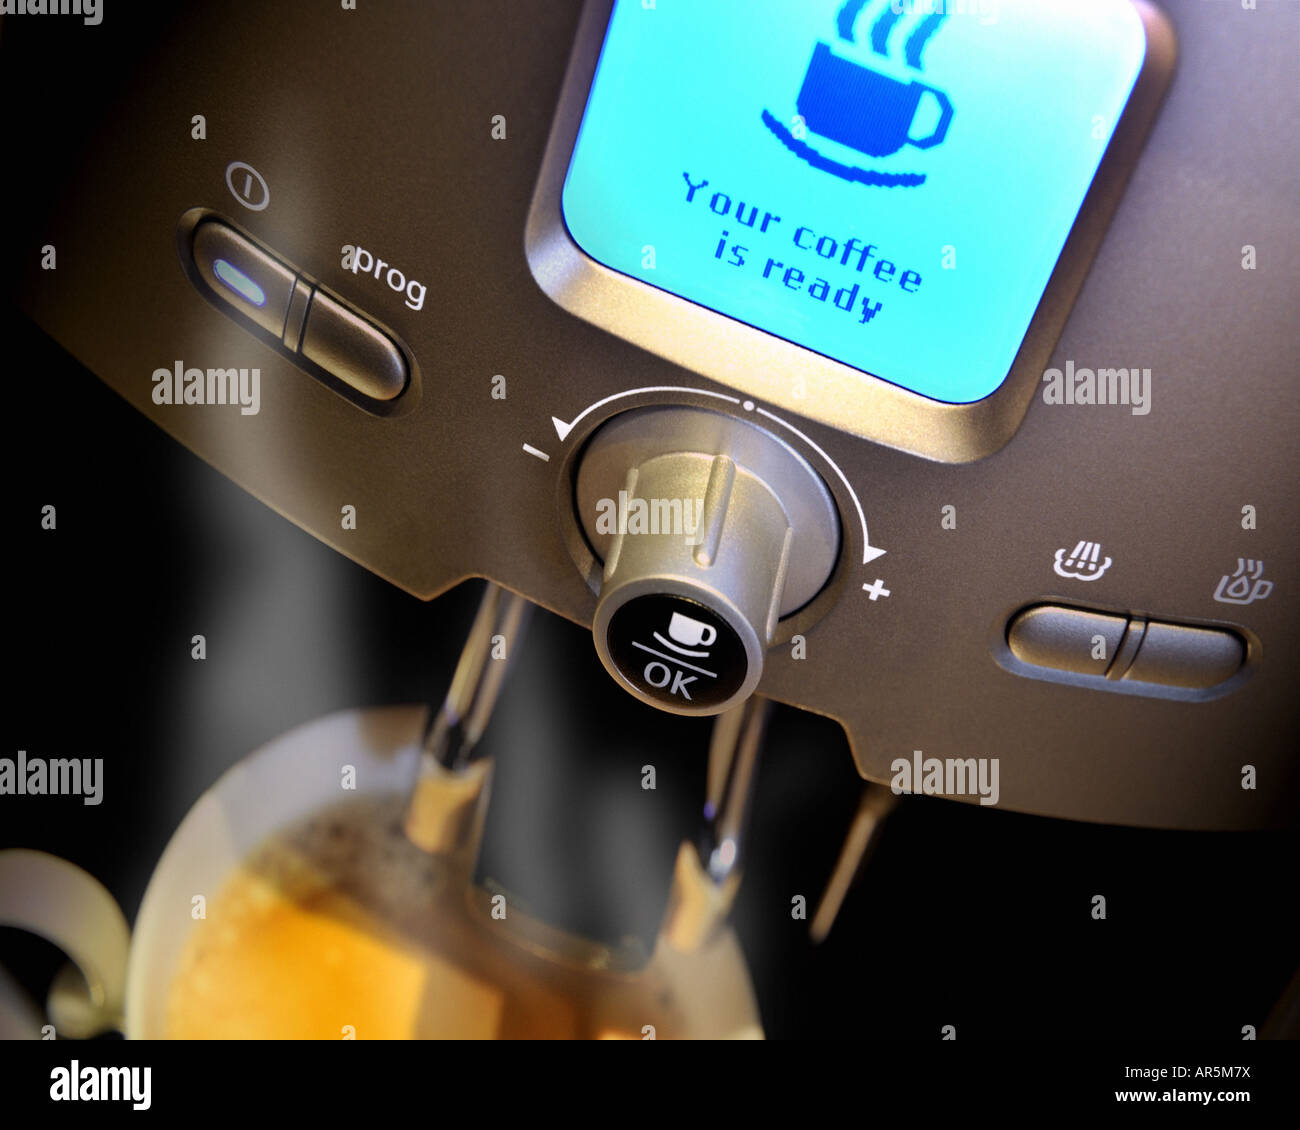 Krups Coffee Machine Making Coffee Photo Stock Photo 2321118173